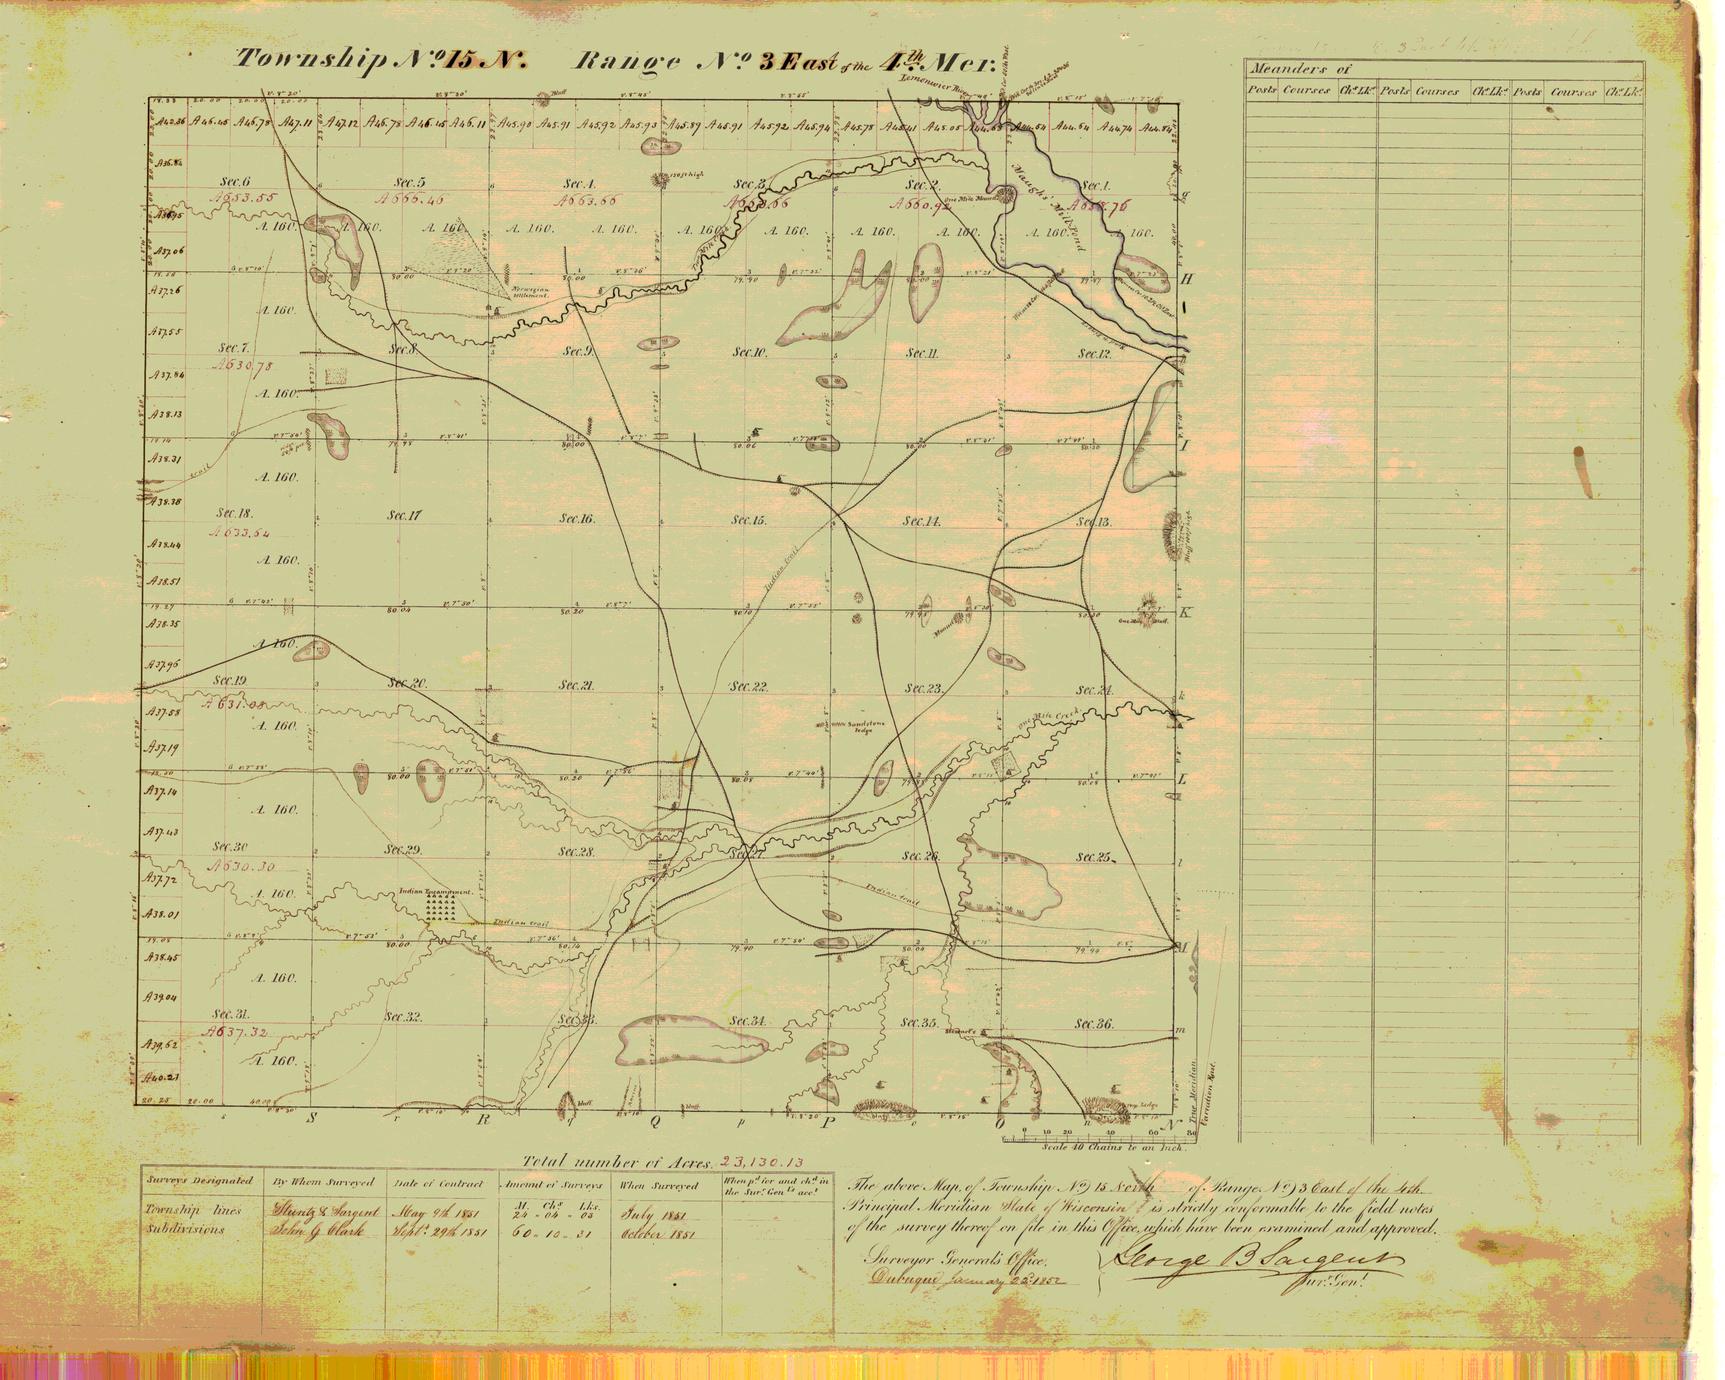 [Public Land Survey System map: Wisconsin Township 15 North, Range 03 East]